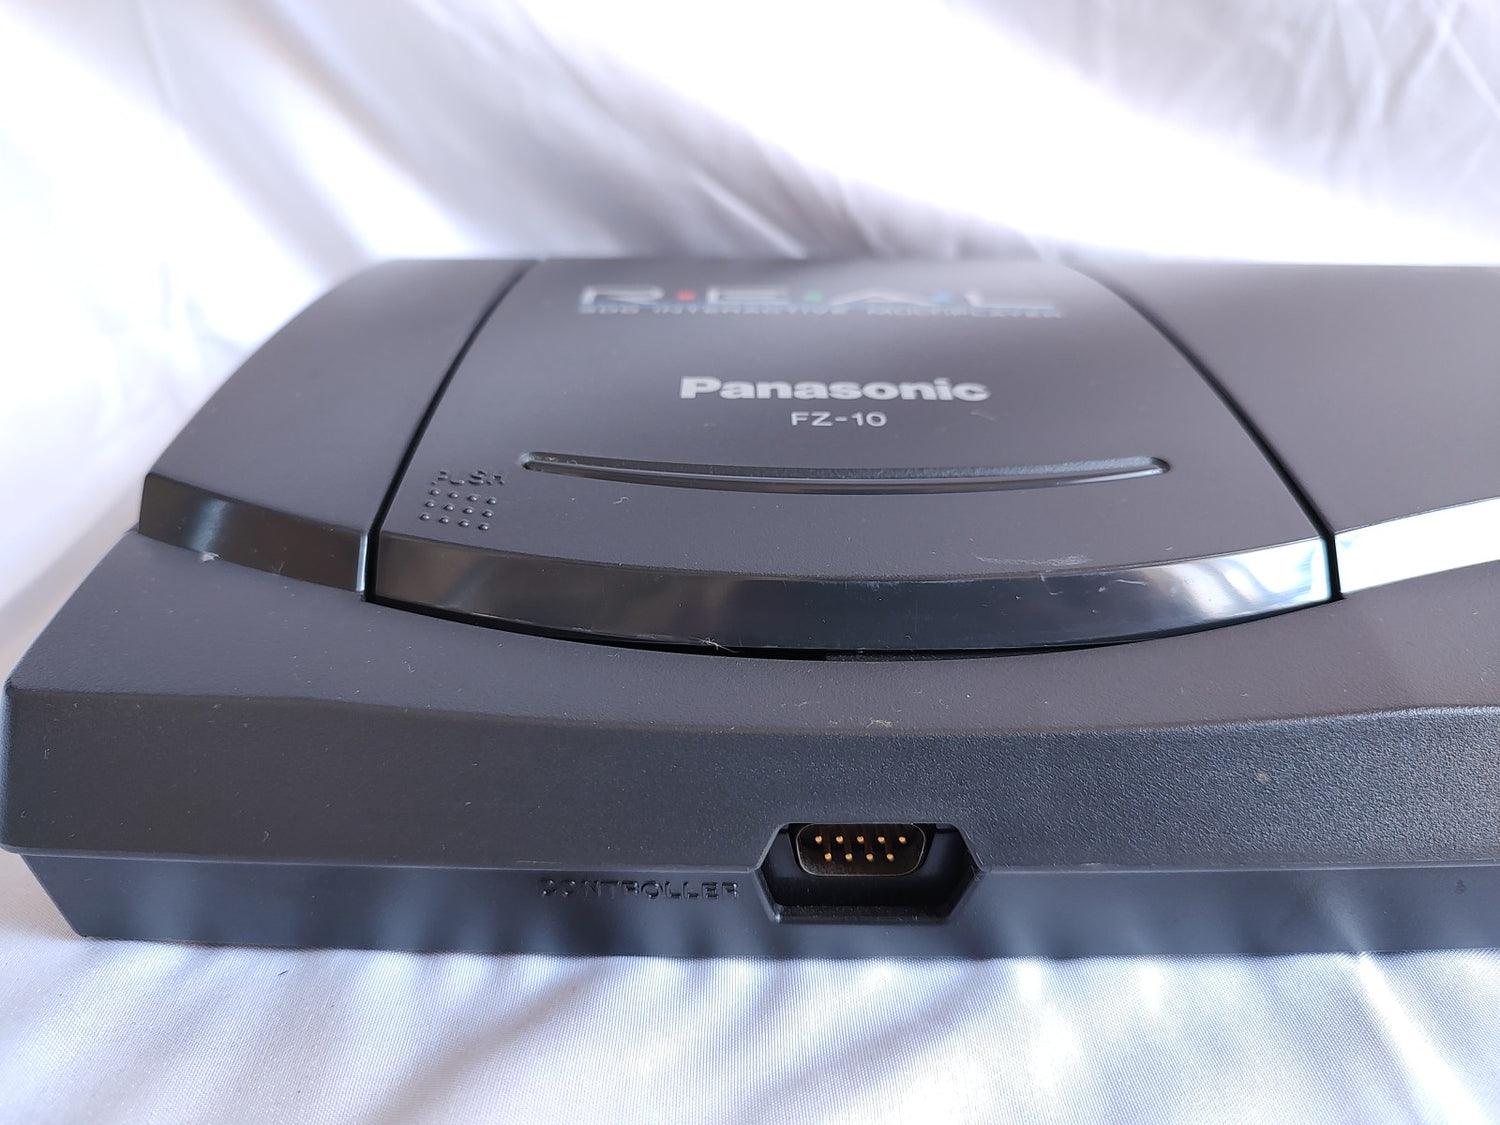 PANASONIC 3.D.O. 3DO Real FZ-10, Controller, Power cable, game set